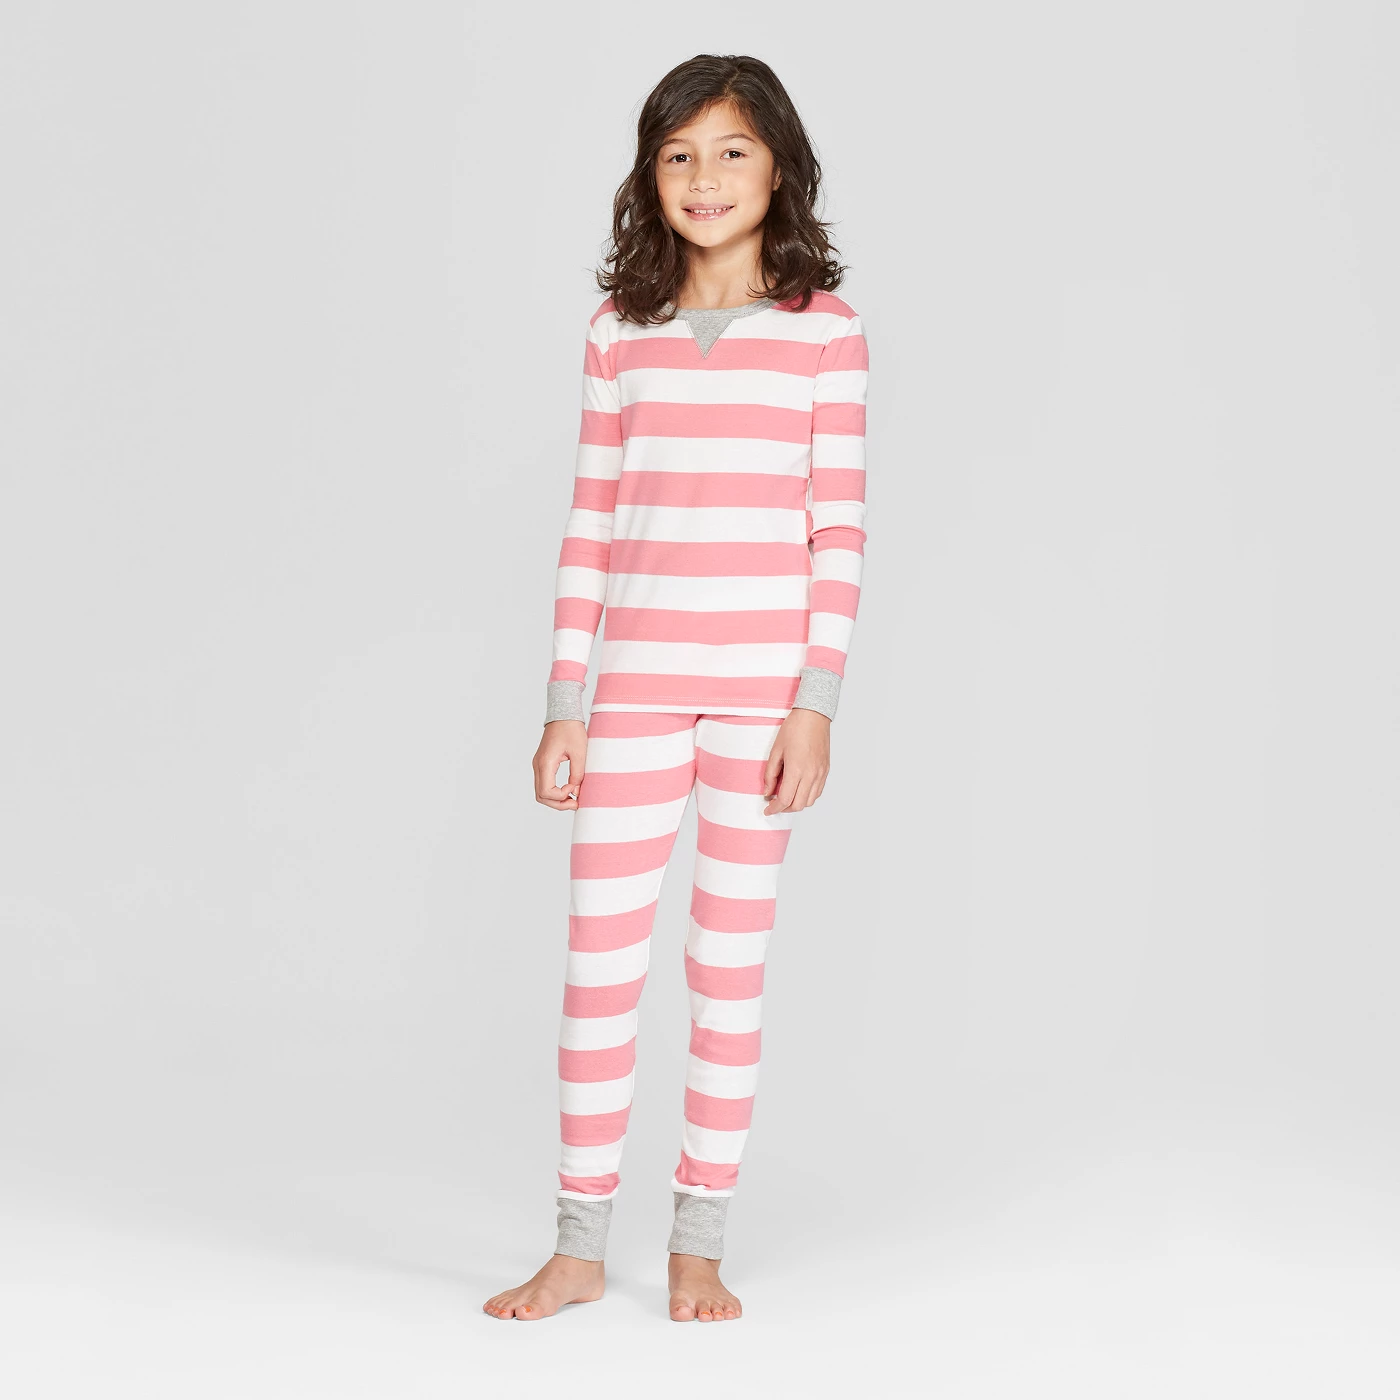 Kid's Striped Pajama Set - Pink - image 1 of 3